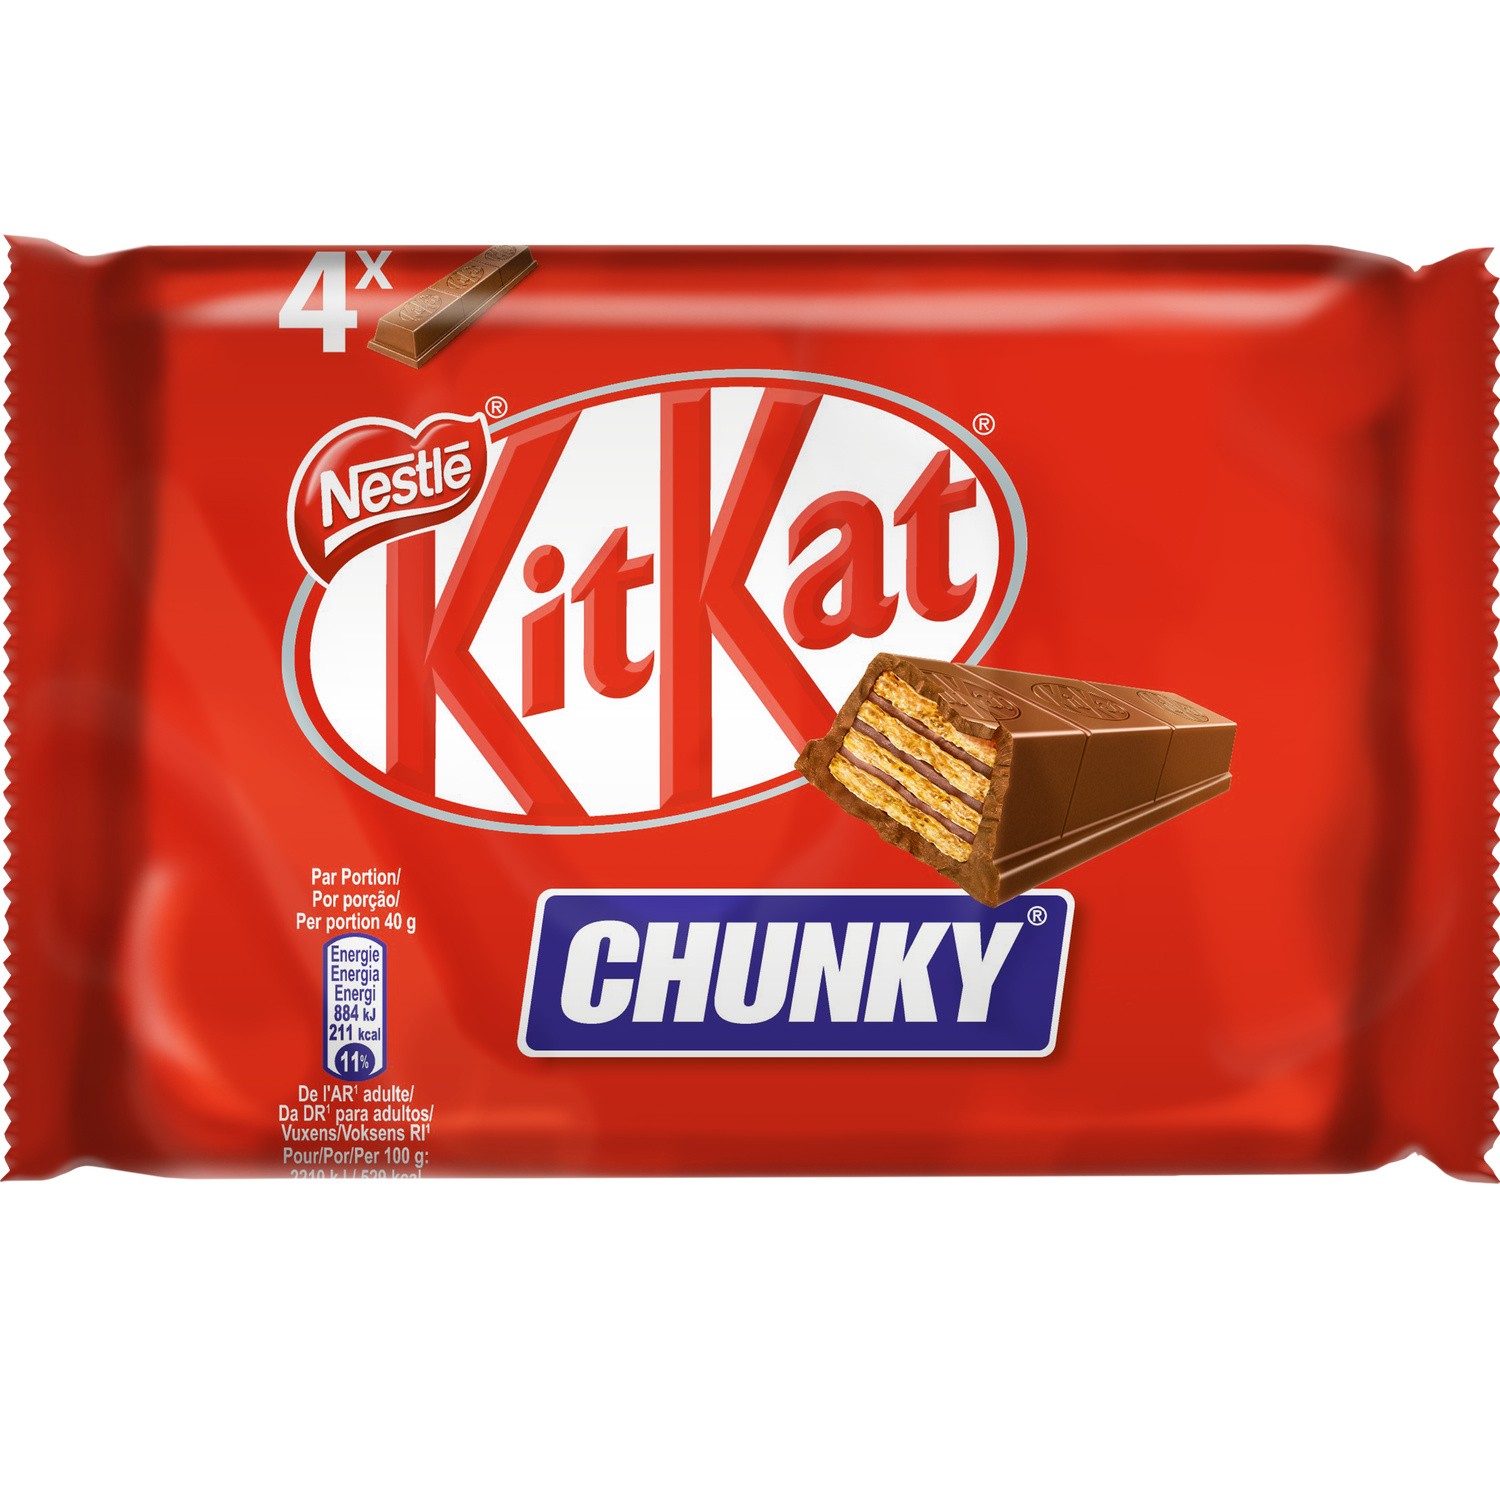 KitKat chunky x4 